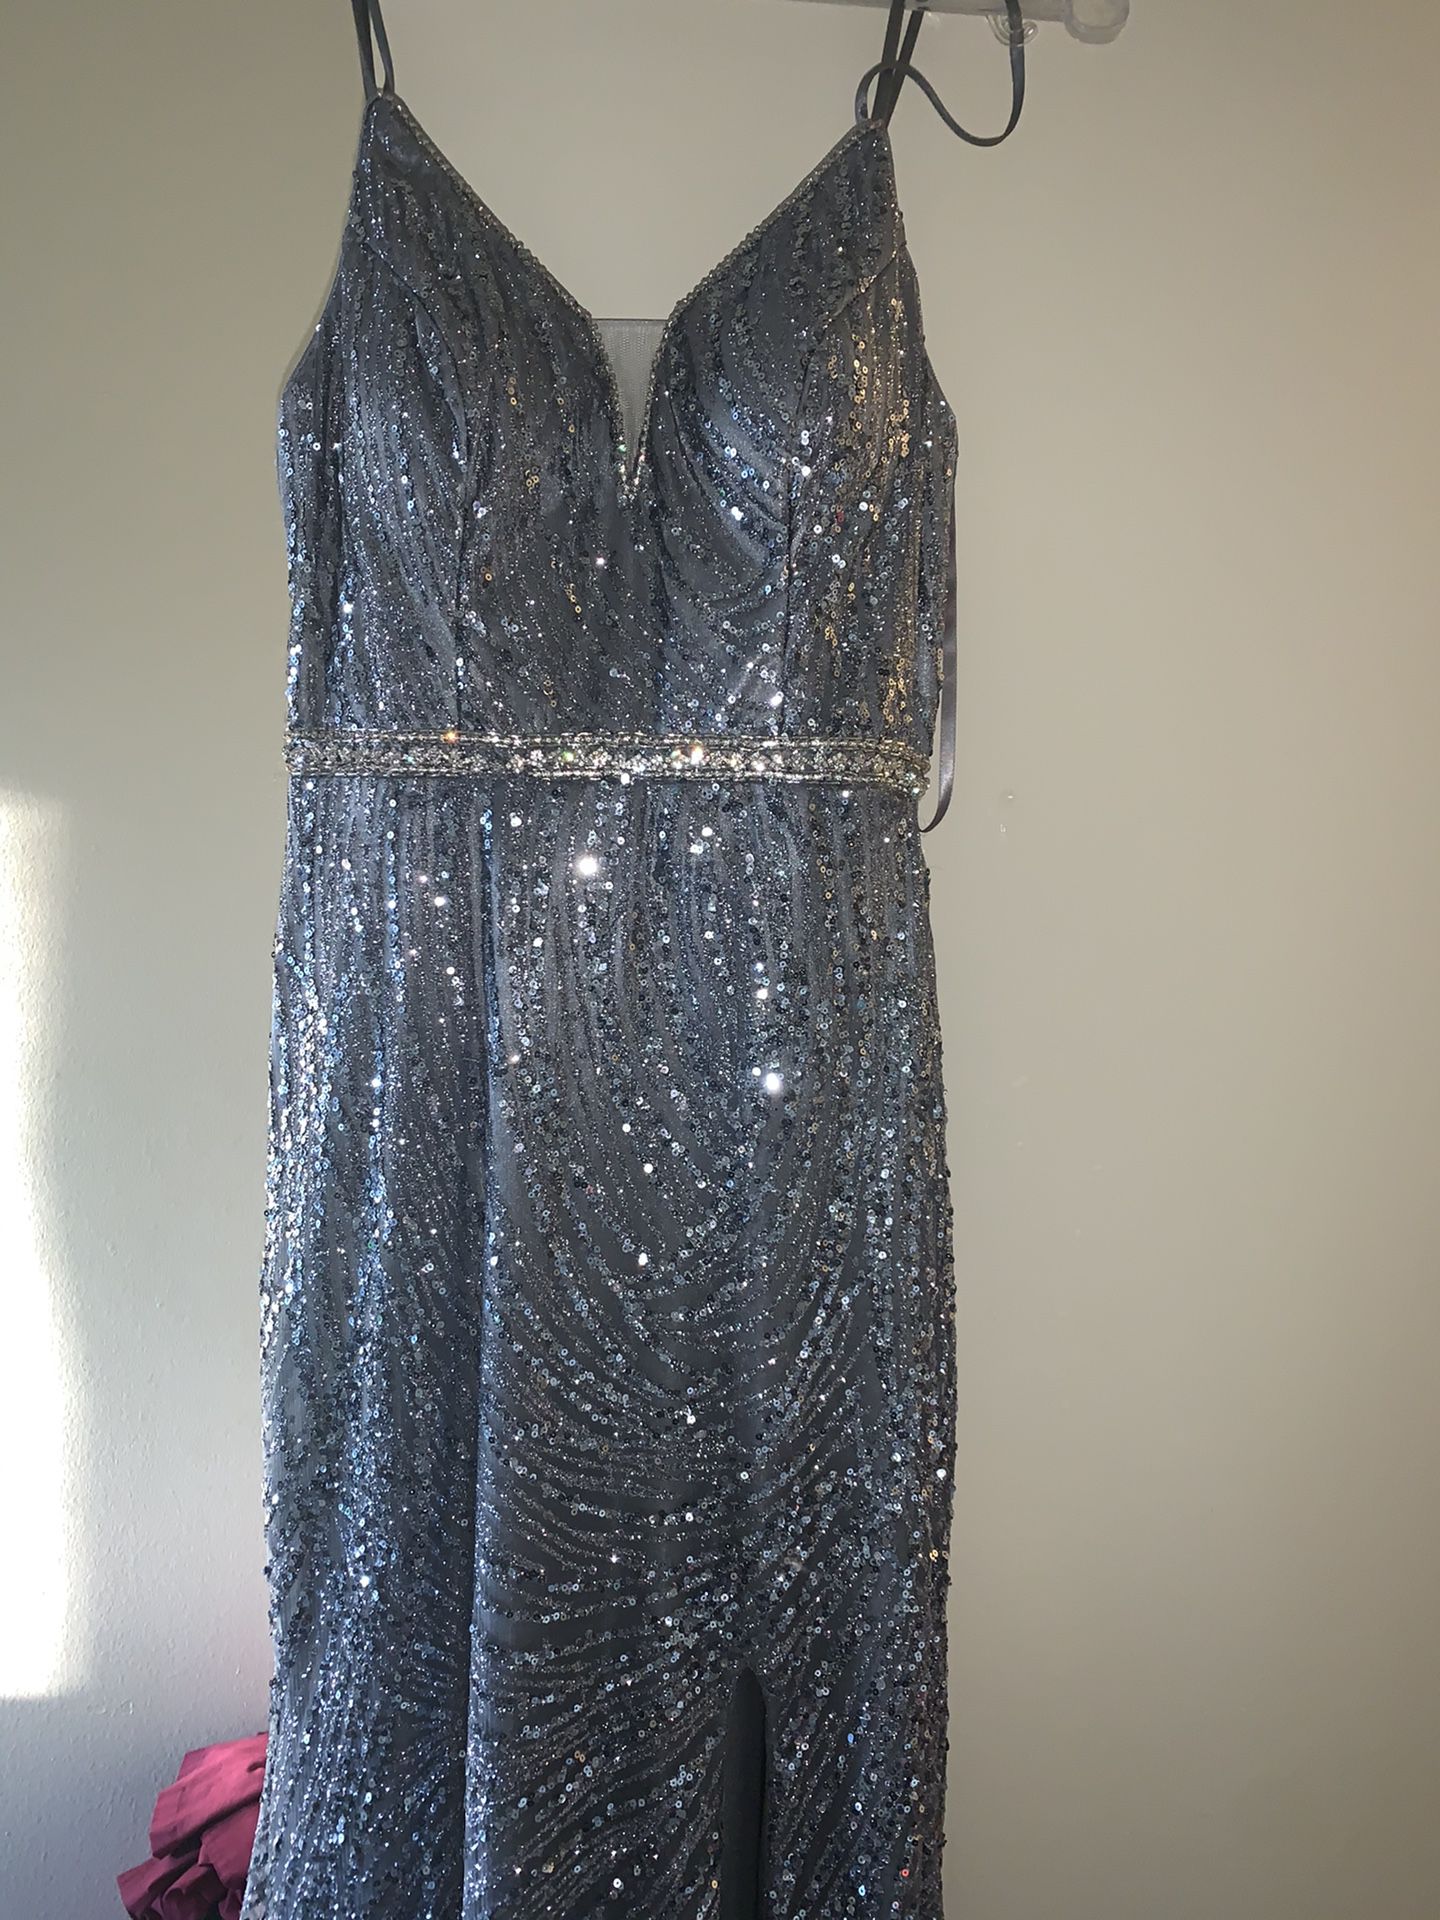 Girls sparkly prom dress (grey) with a slit